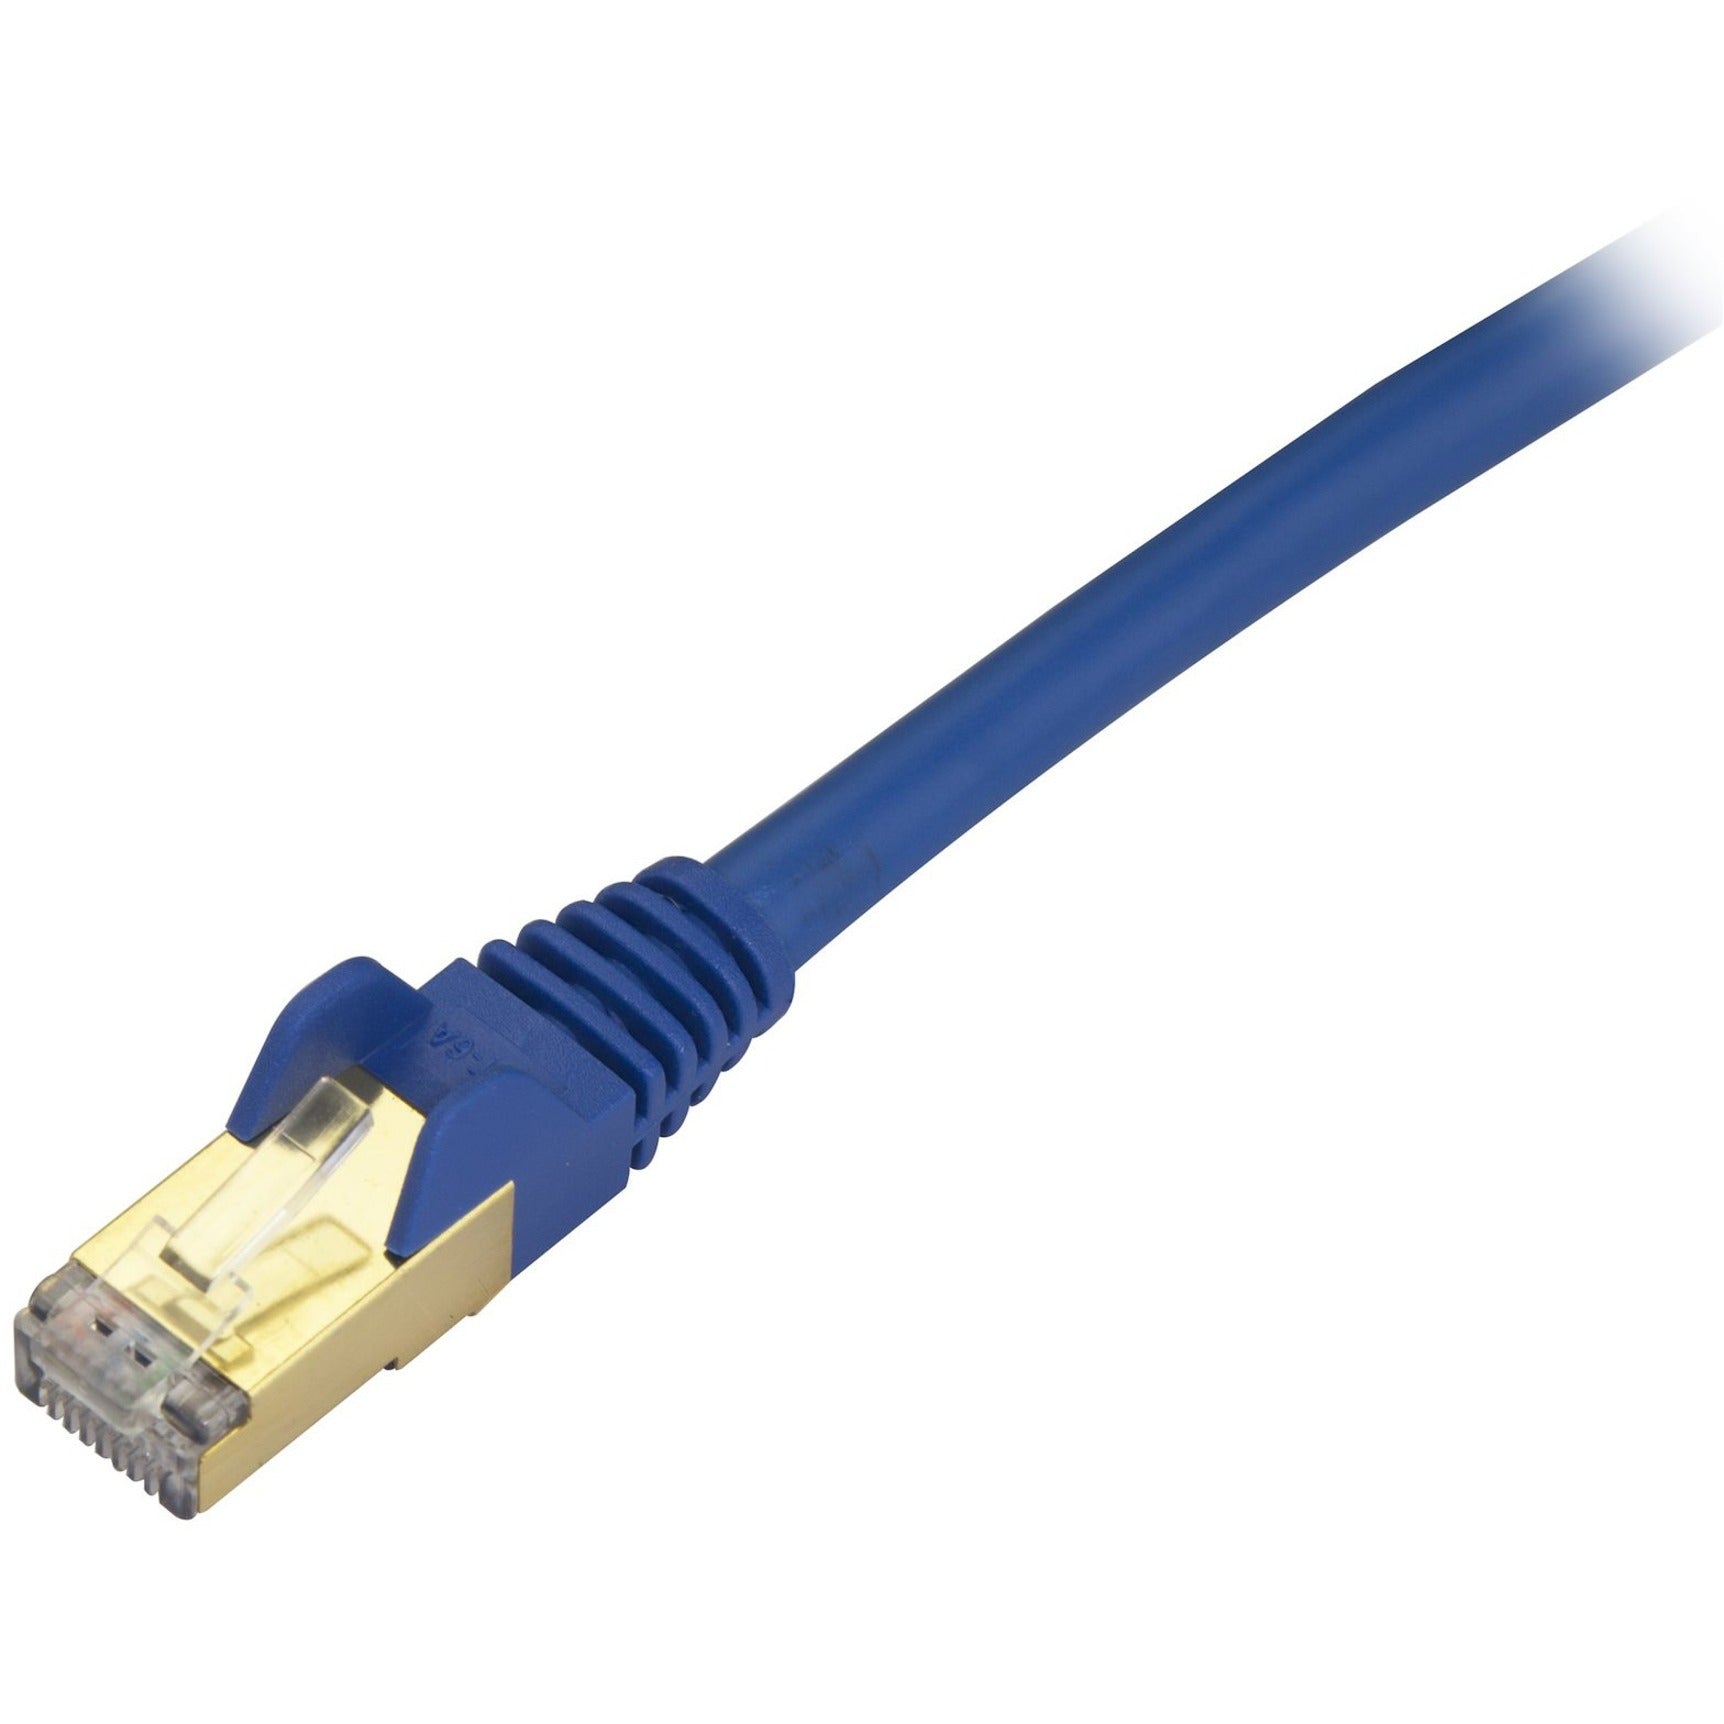 StarTech.com C6ASPAT4BL Cat6a Ethernet Patch Cable - Shielded (STP) - 4 ft., Blue, Snagless RJ45 Ethernet Cord